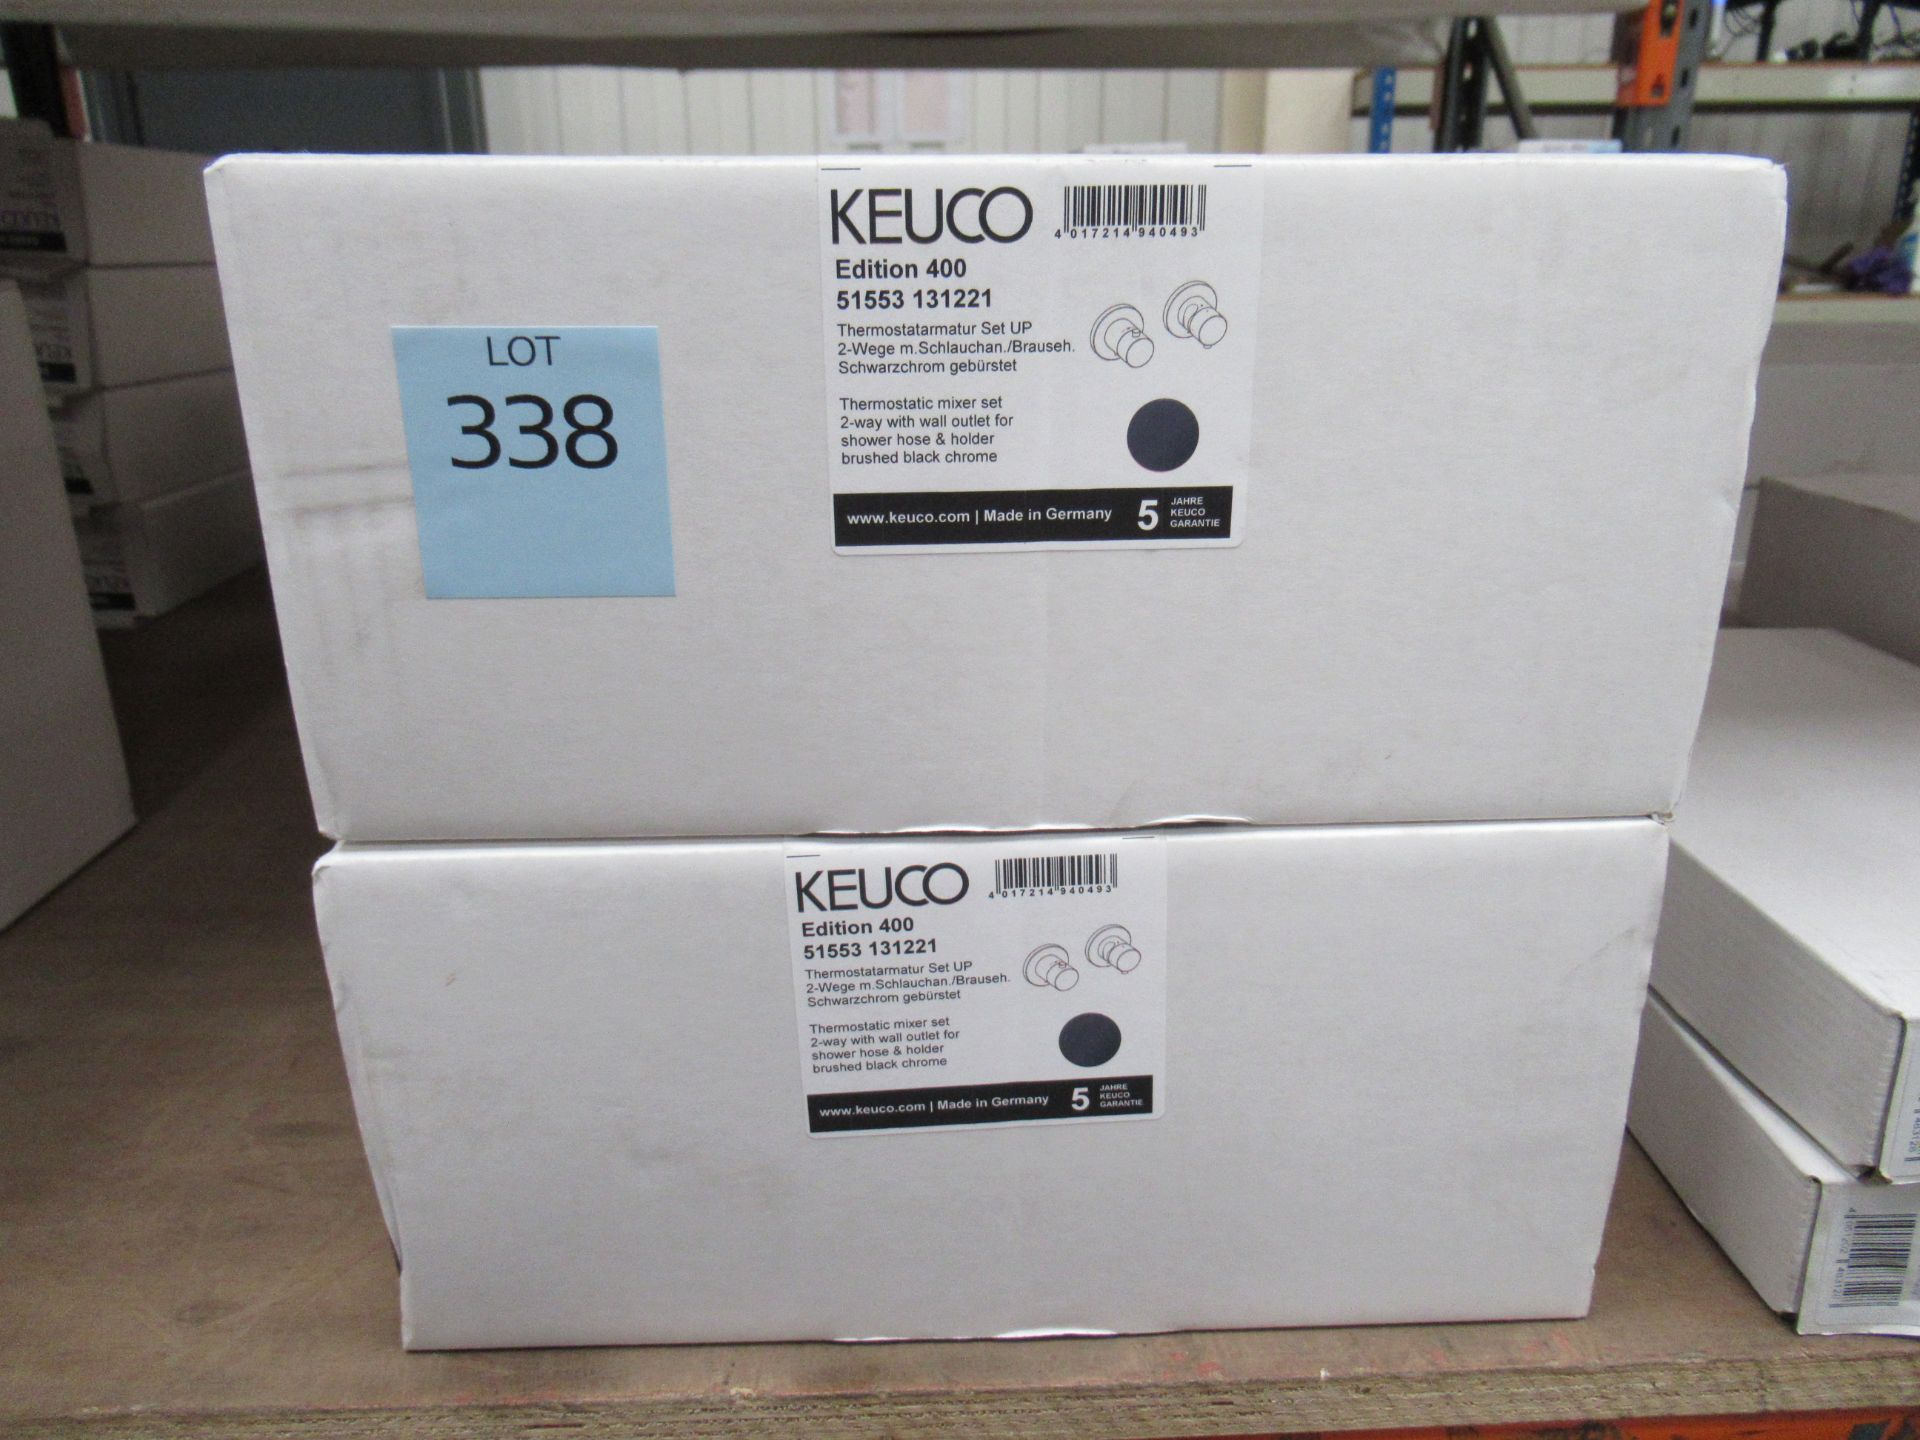 2 x Keuco Edition 400 thermostatic Mixer Sets Brushed Black Chrome, P/N 51553-131221